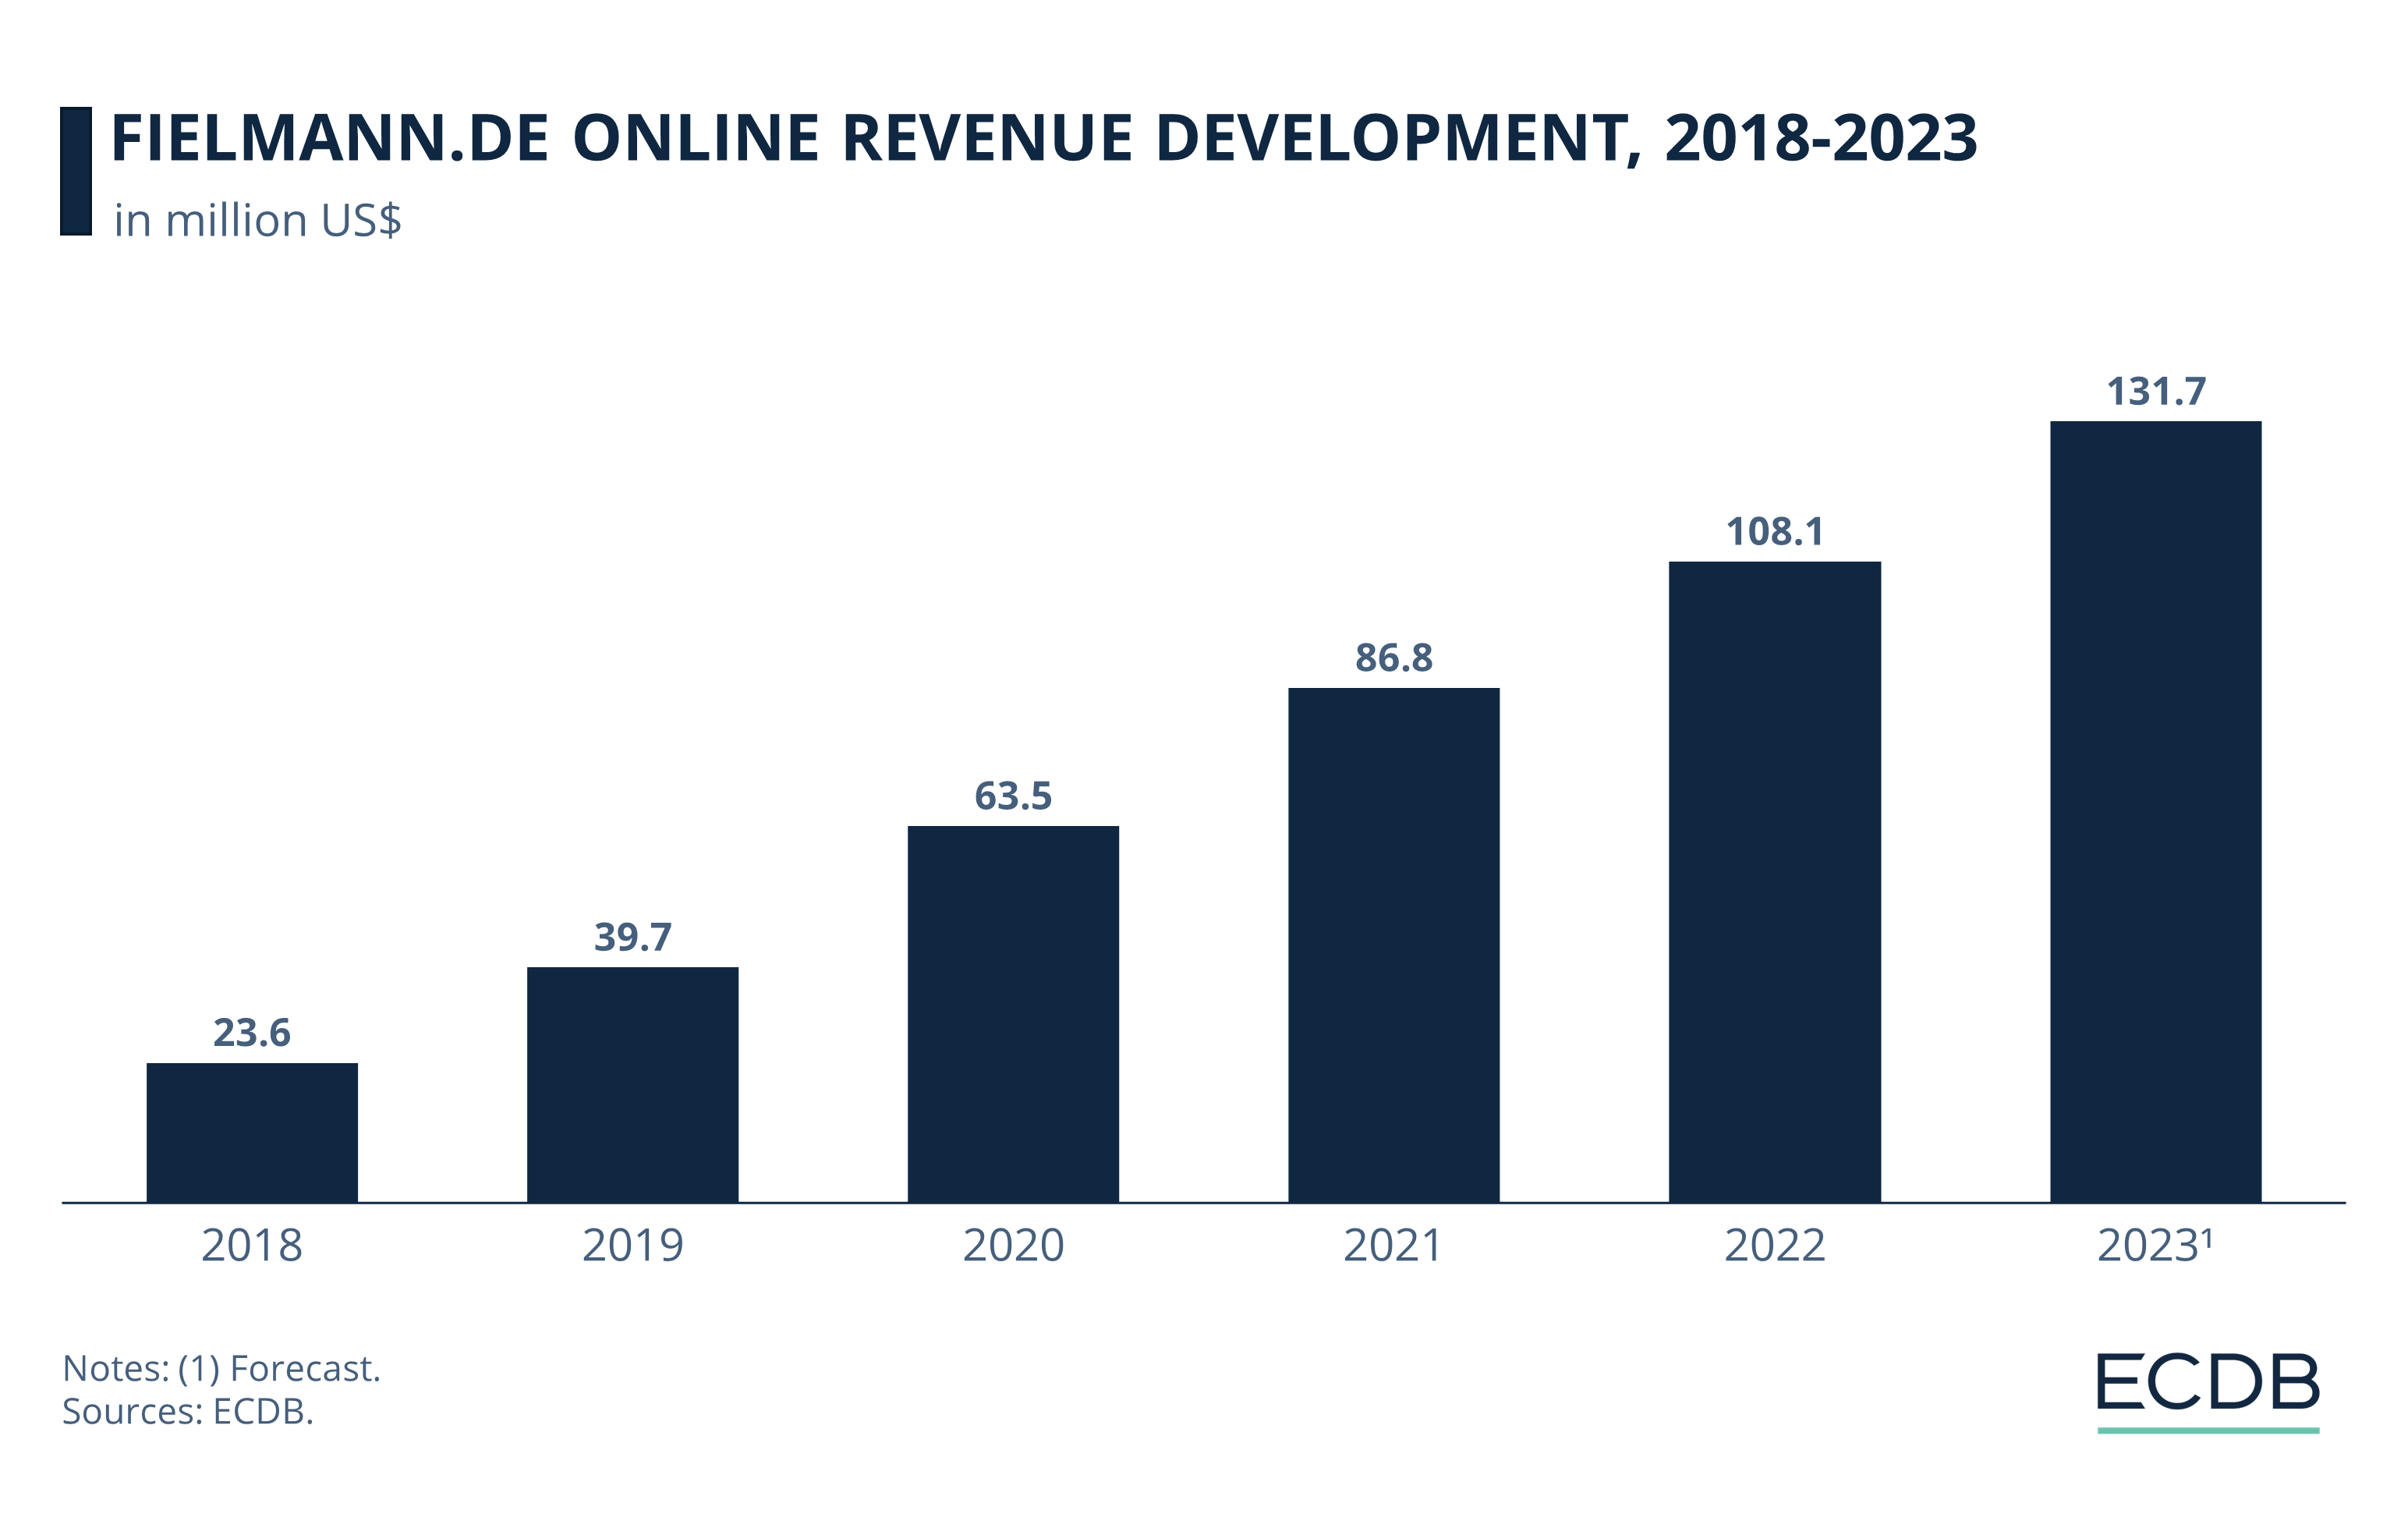 Fielmann.de Online Revenue Development, 2018-2023